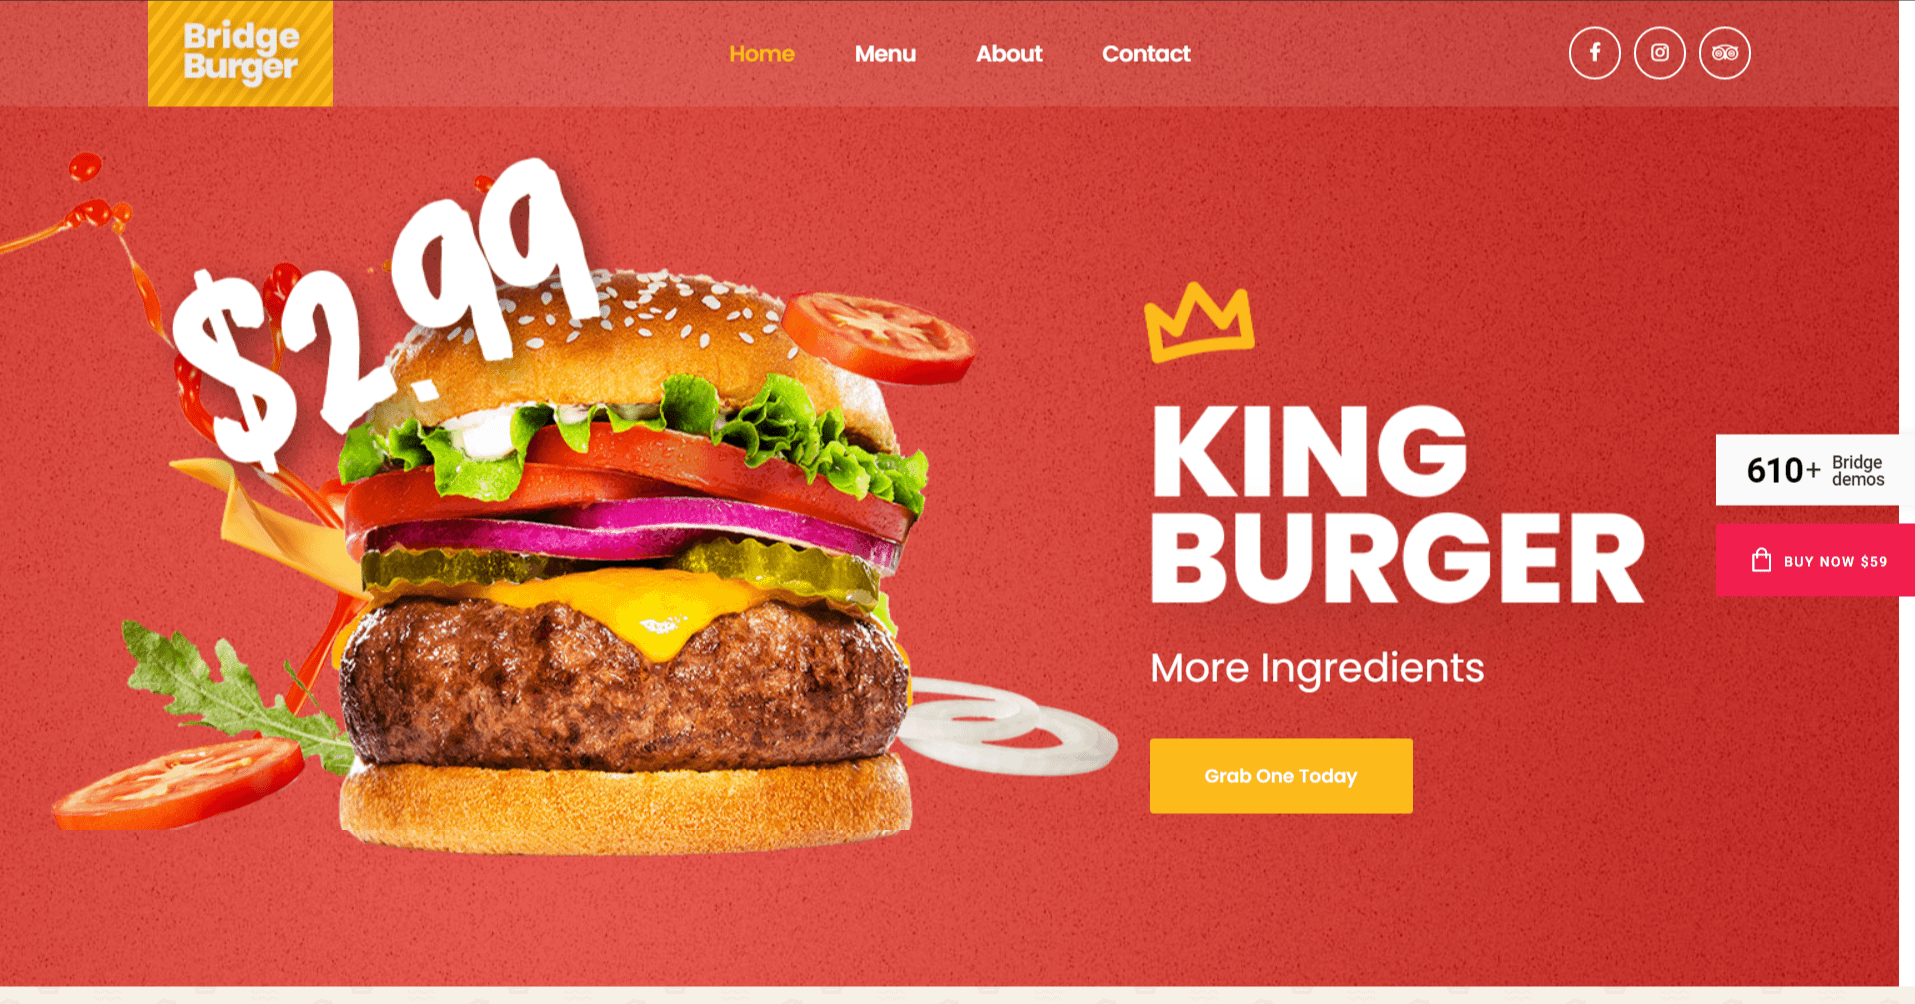 Burger - fast food